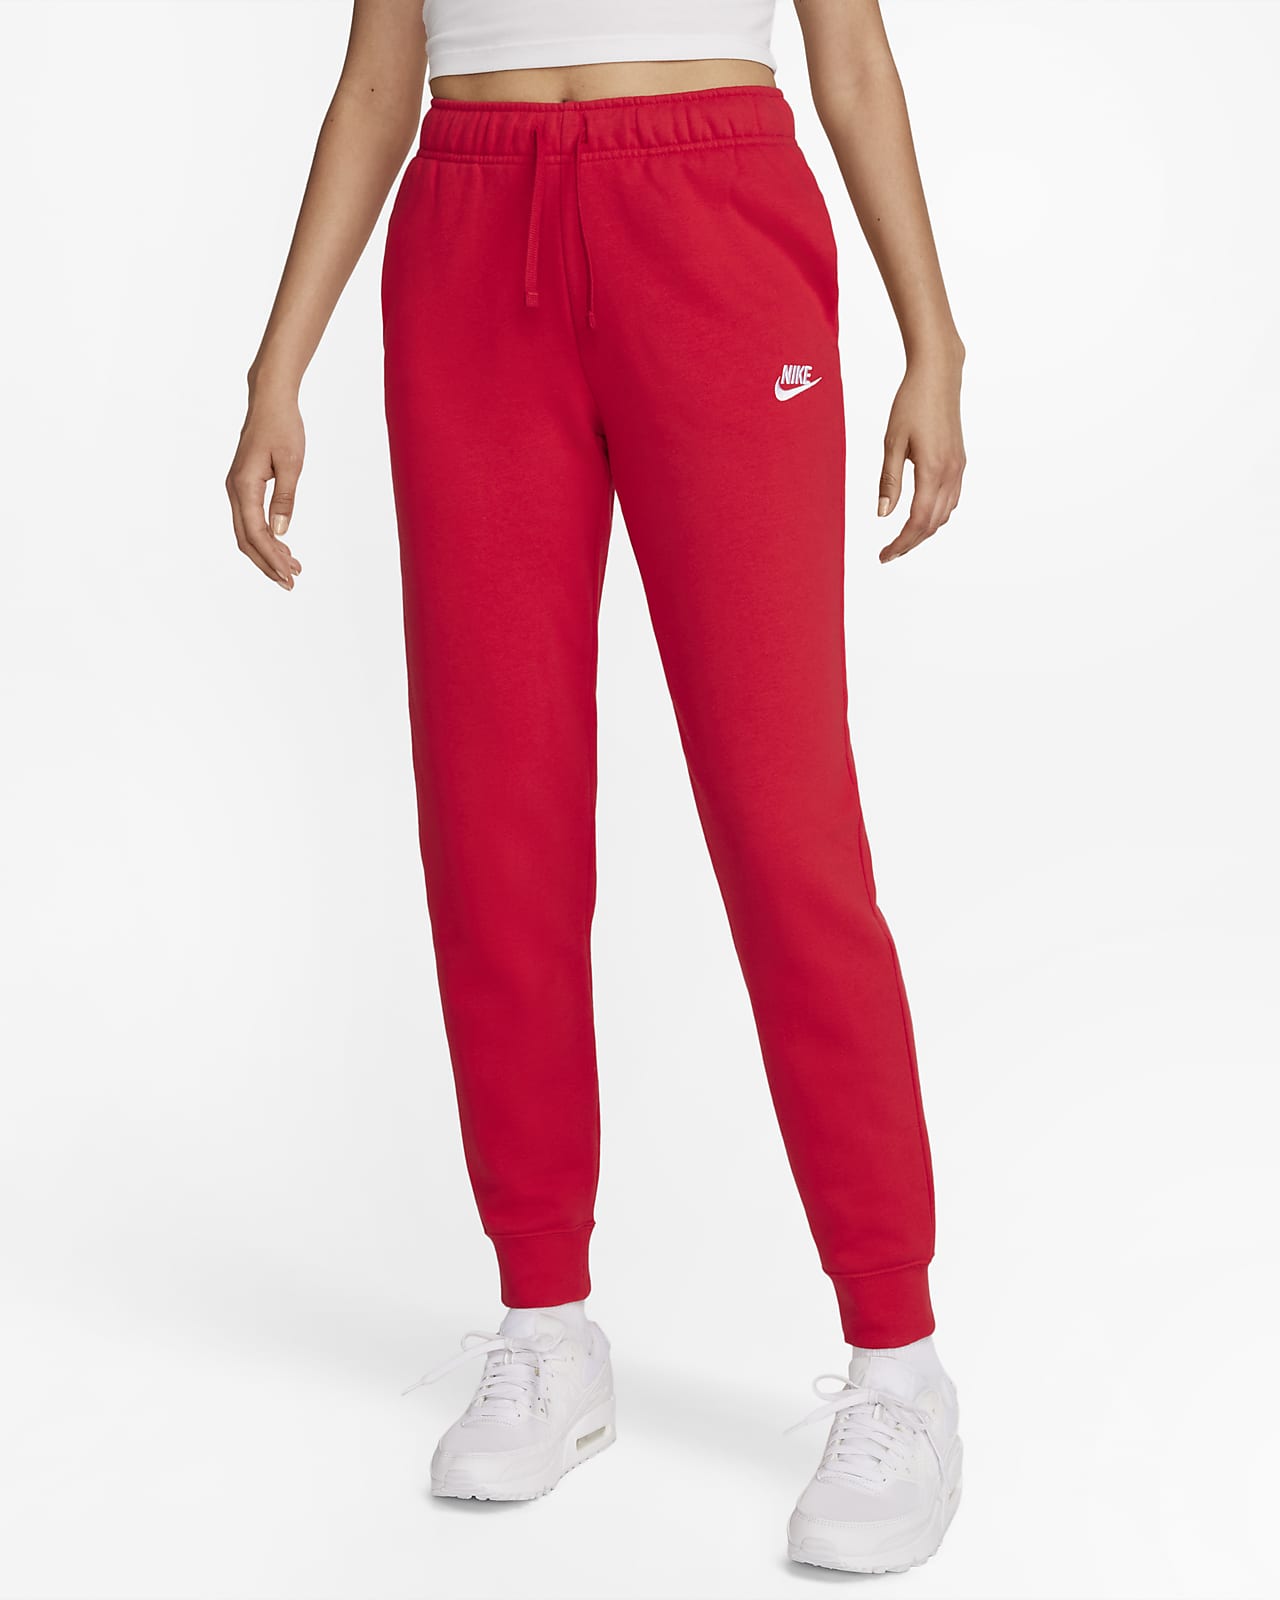 Negende Intiem Prooi Nike Sportswear Club Fleece Joggingbroek met halfhoge taille voor dames.  Nike NL